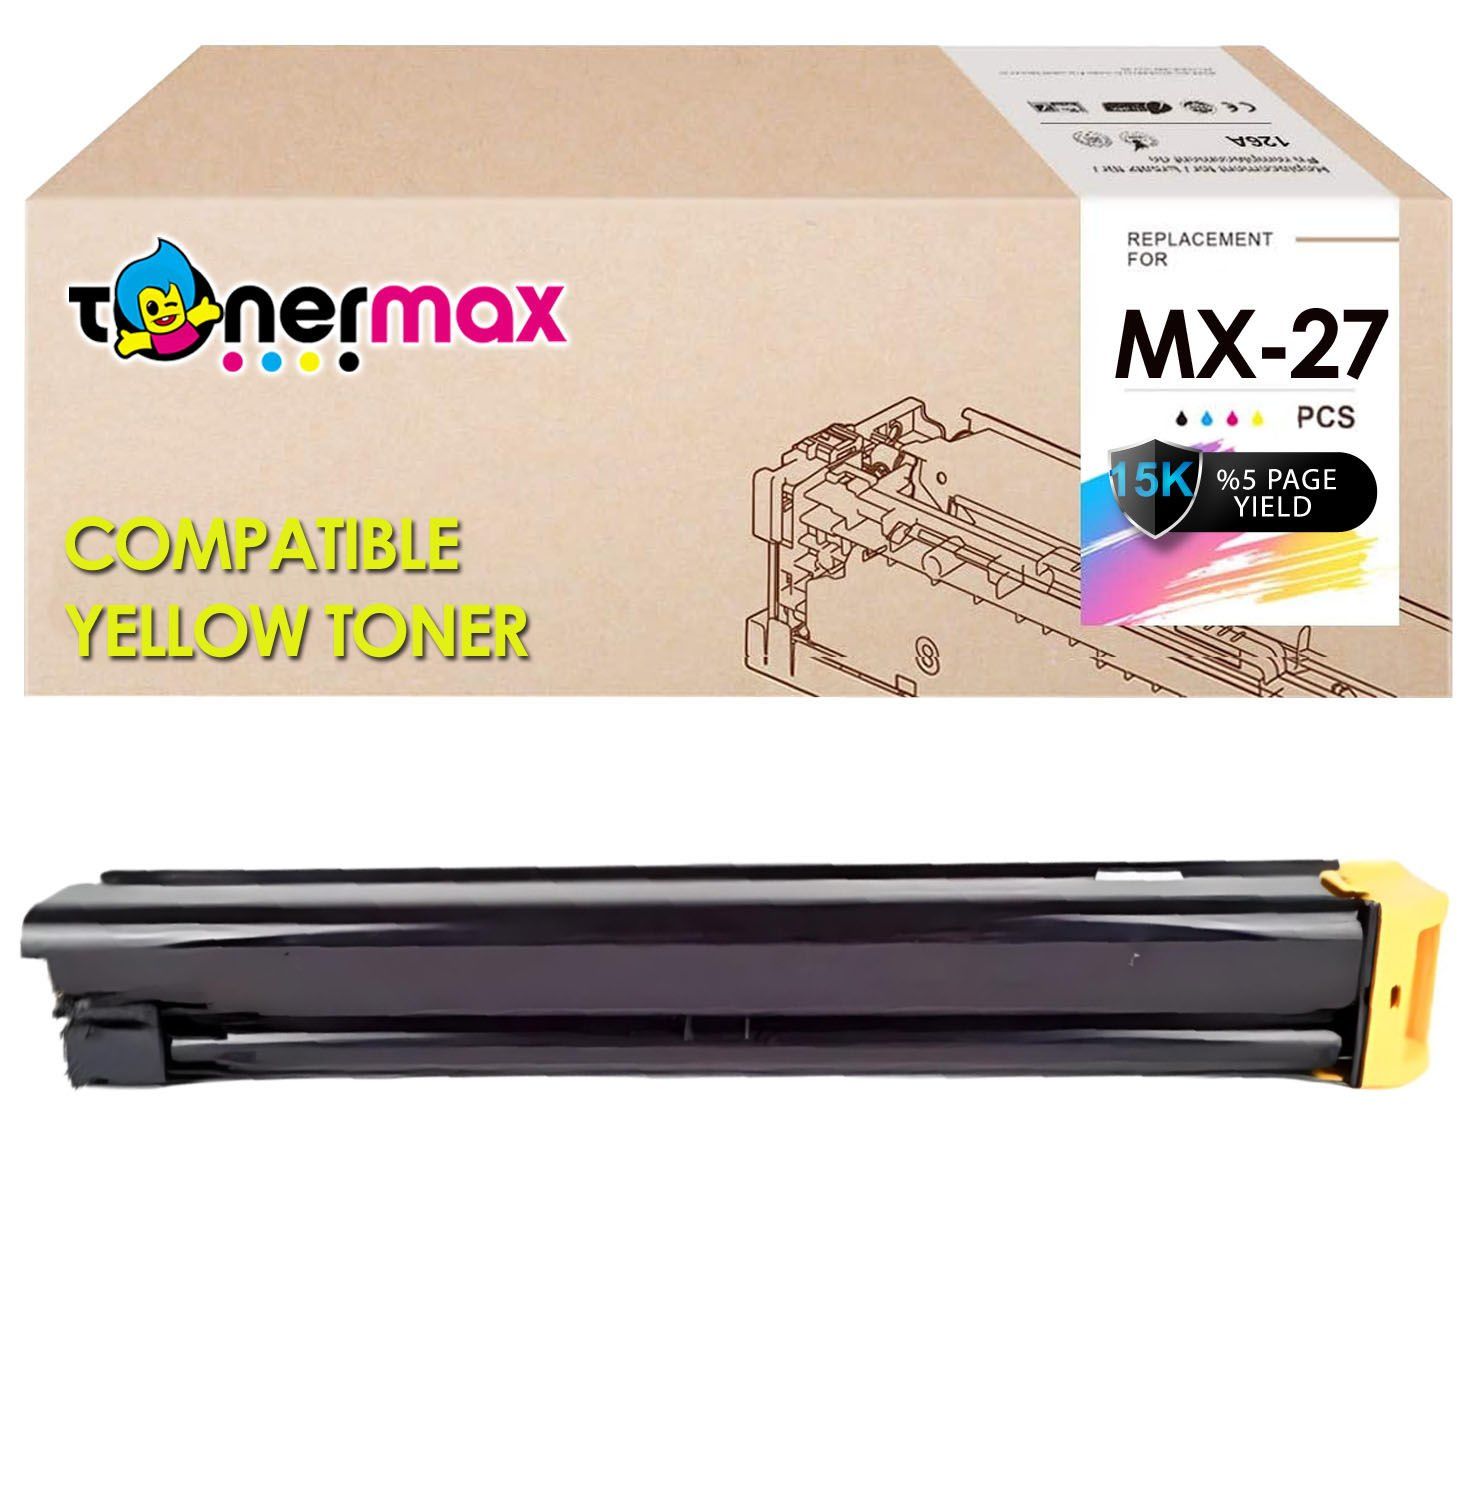 Sharp MX-27GT Muadil Toner Sarı/ MX2300 / MX2700 / MX4501